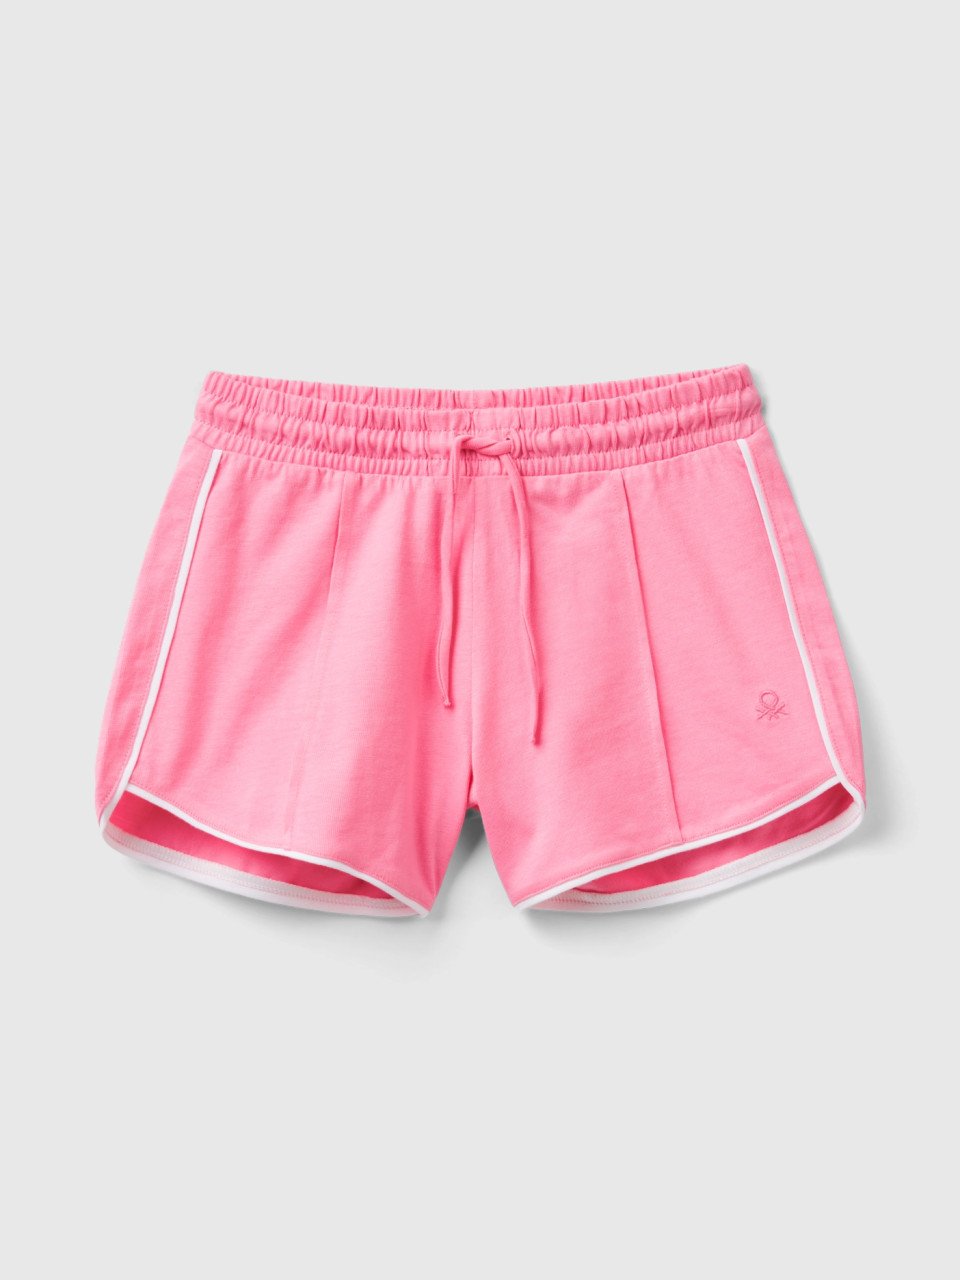 Benetton, 100% Cotton Shorts With Drawstring, Pink, Kids